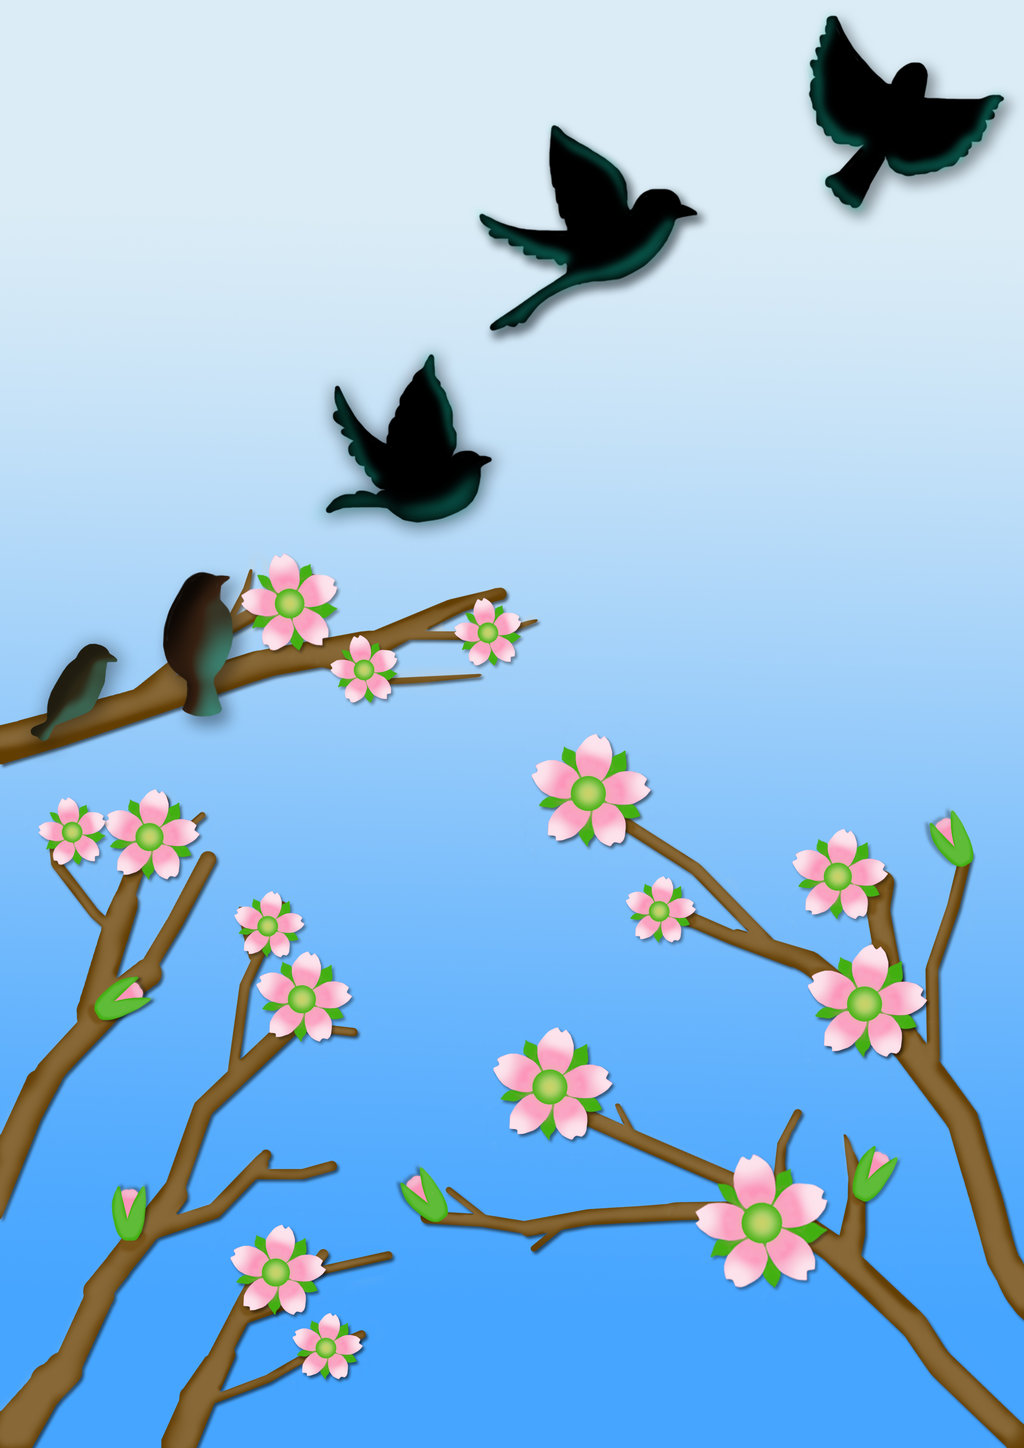 blossom birds silhouette flowers sky blue fly